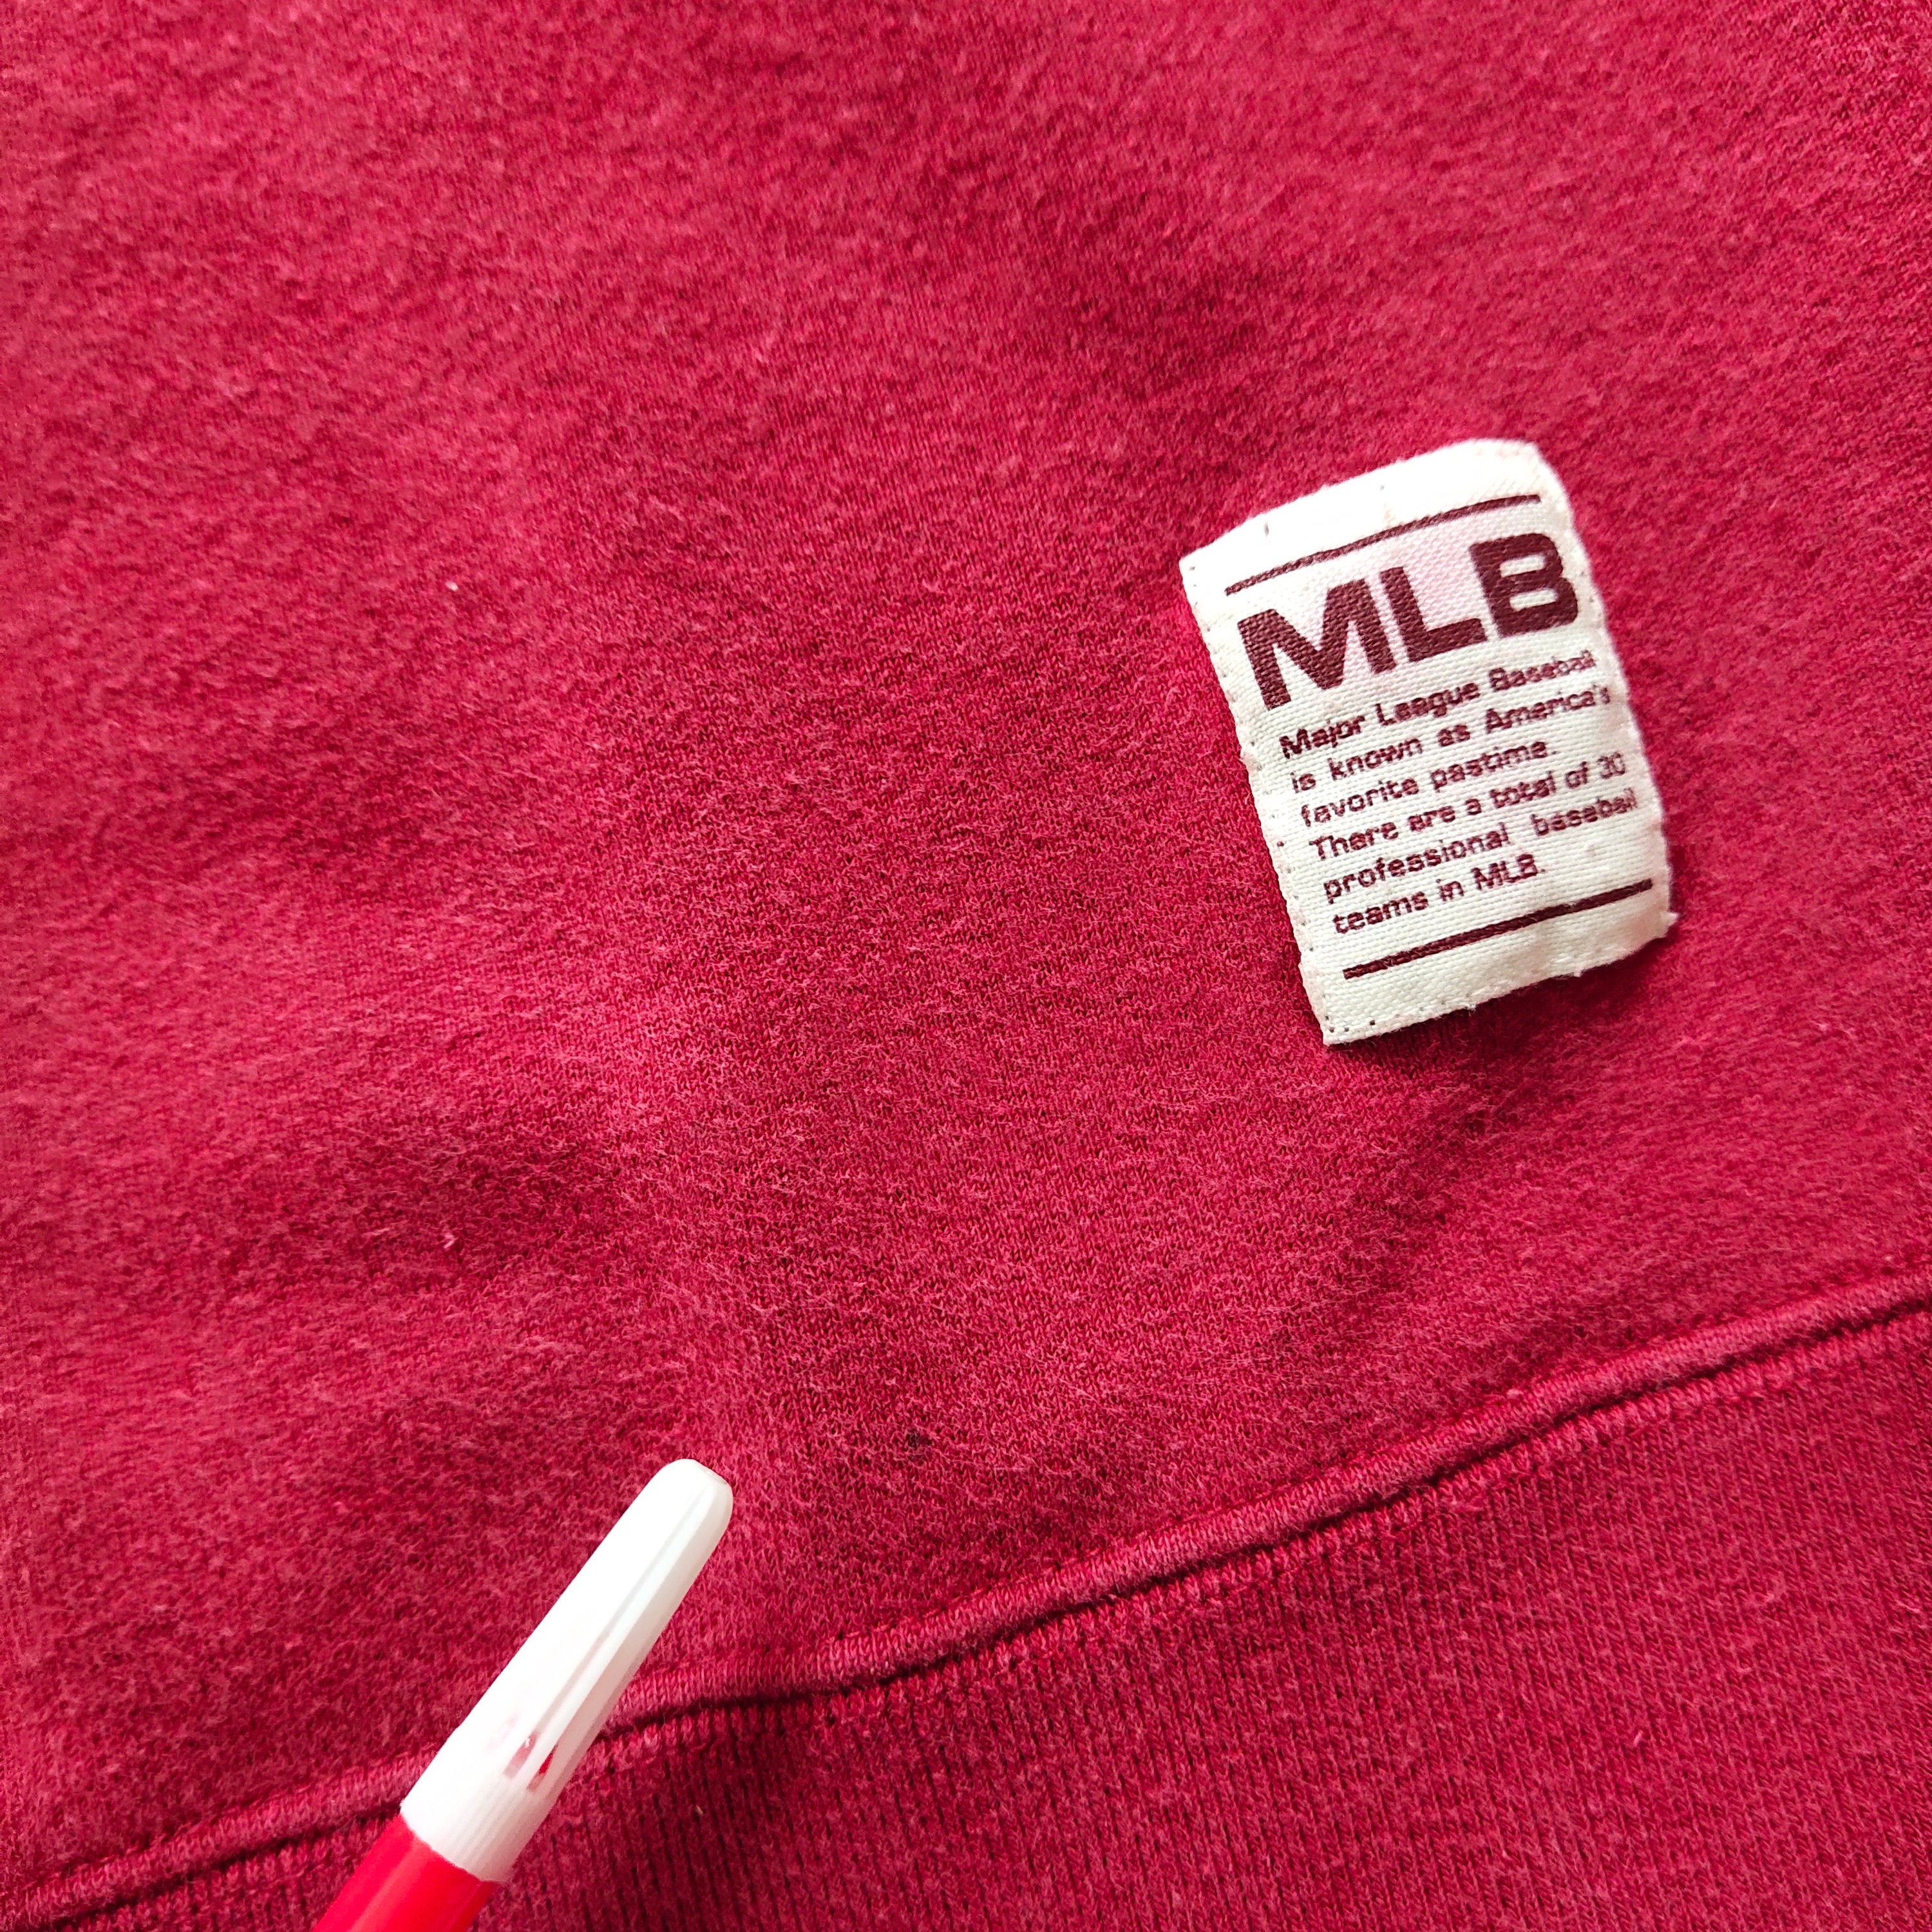 Buy LOUISVILLE CARDINALS Sweatshirt Pullover Jumper MLB Baseball Online in  India 